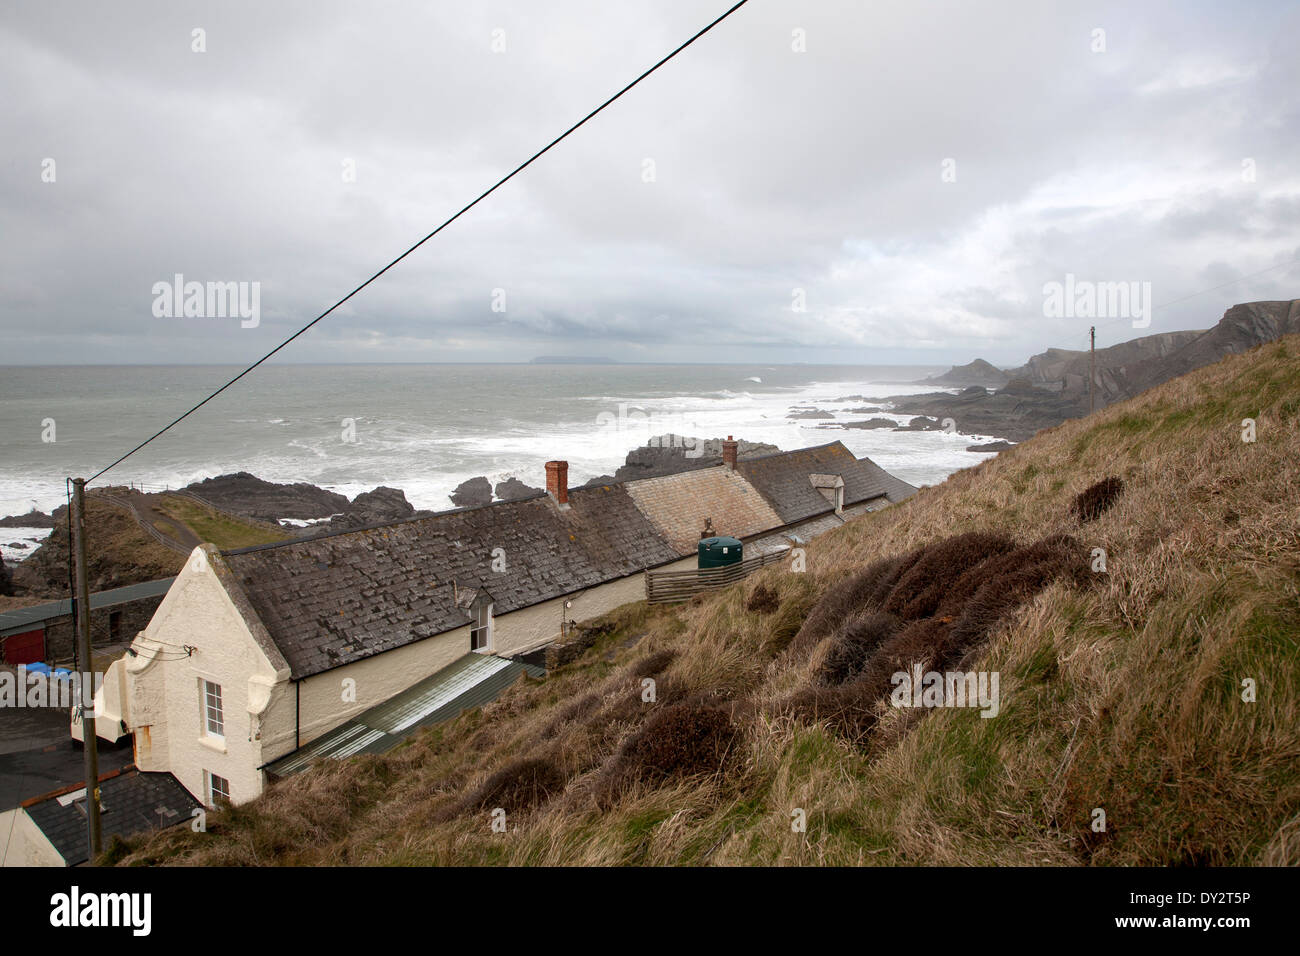 Hotel buildings and stormy sea, Hartland Quay, north Devon coast, England Stock Photo